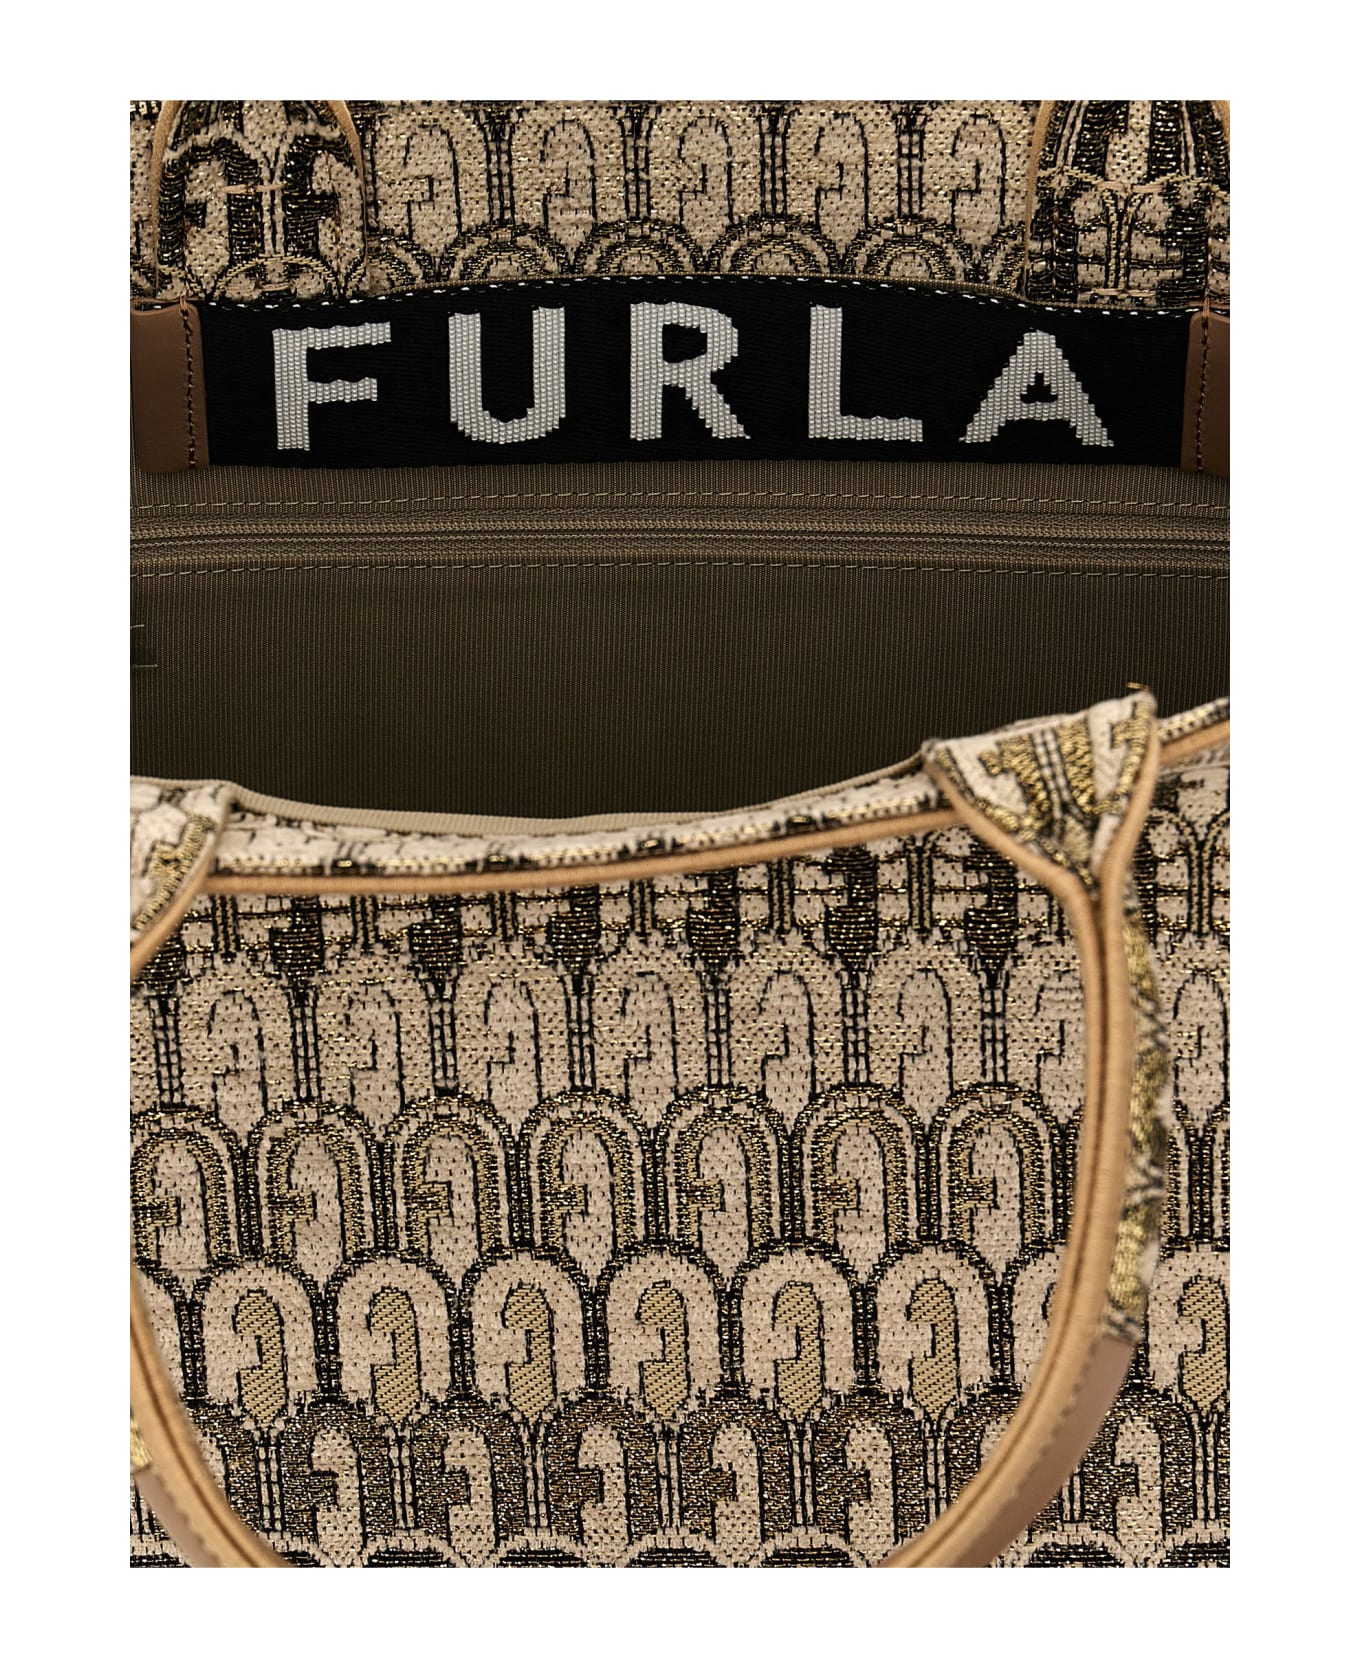 Furla 'opportunity L' Shopping Bag - Toni Color Gold